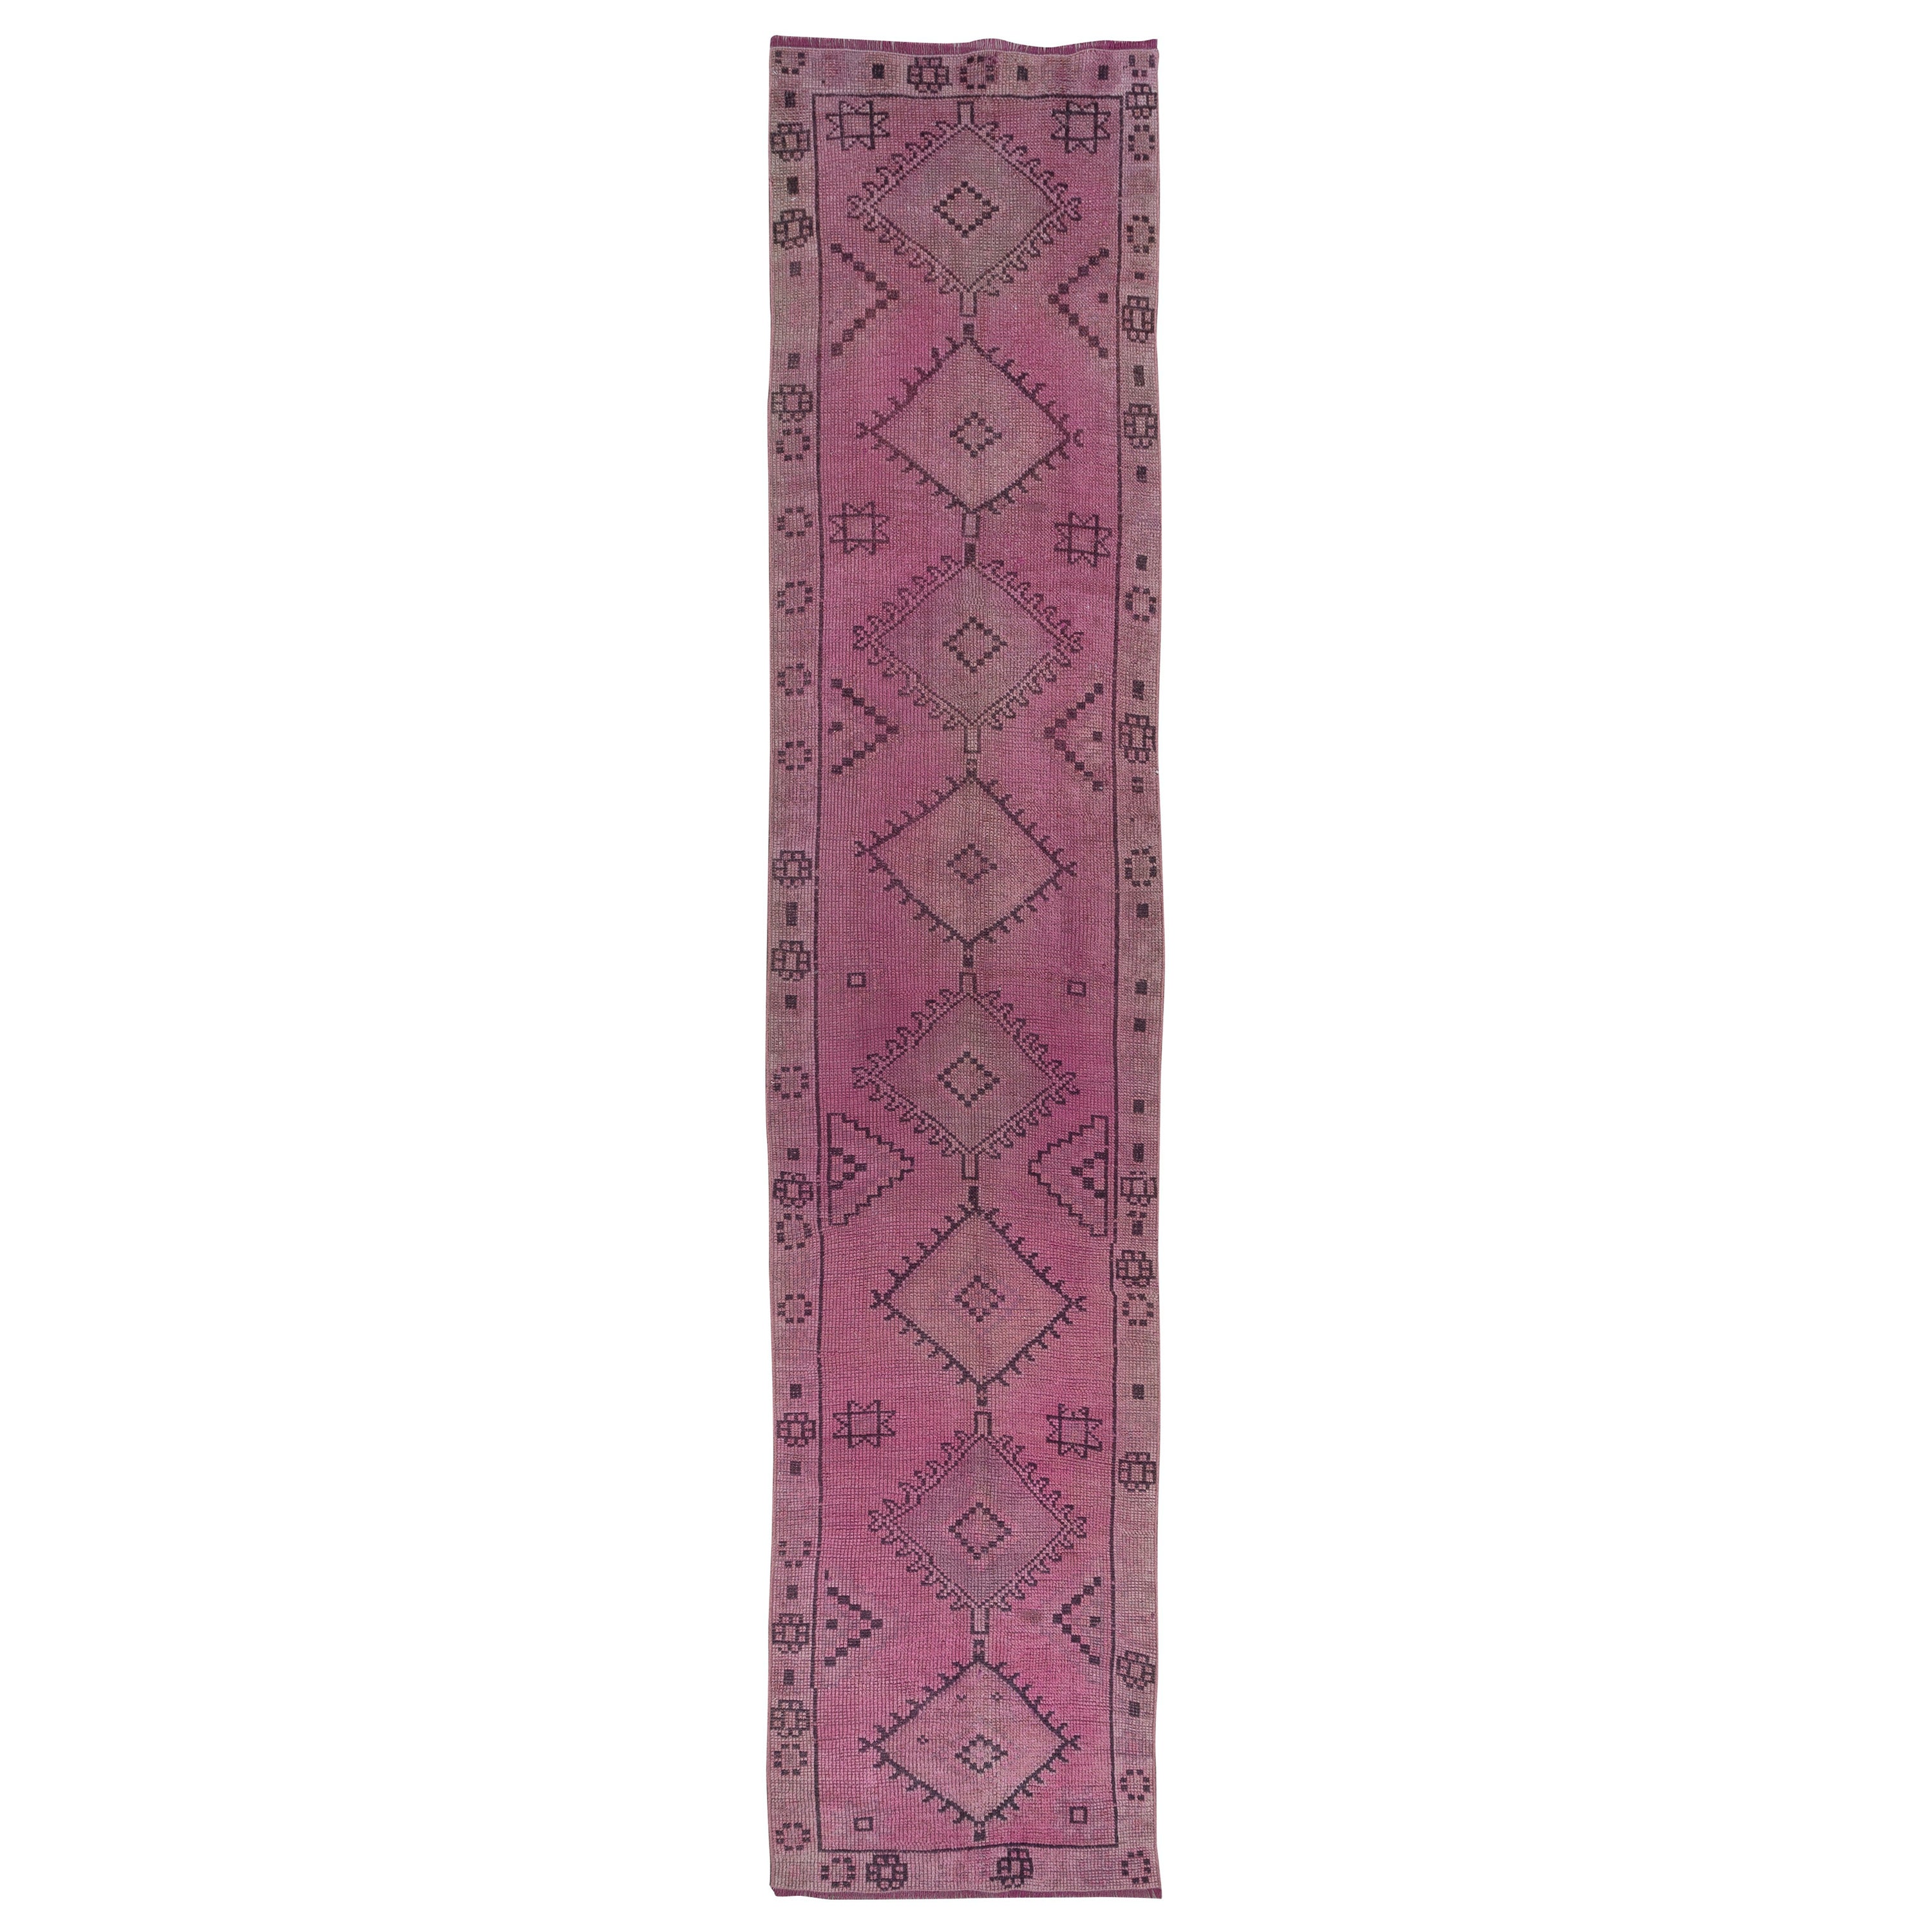 2.8x12.5 Ft Handmade Pink Runner Rug for Hallway, Modern Turkish Corridor Carpet For Sale